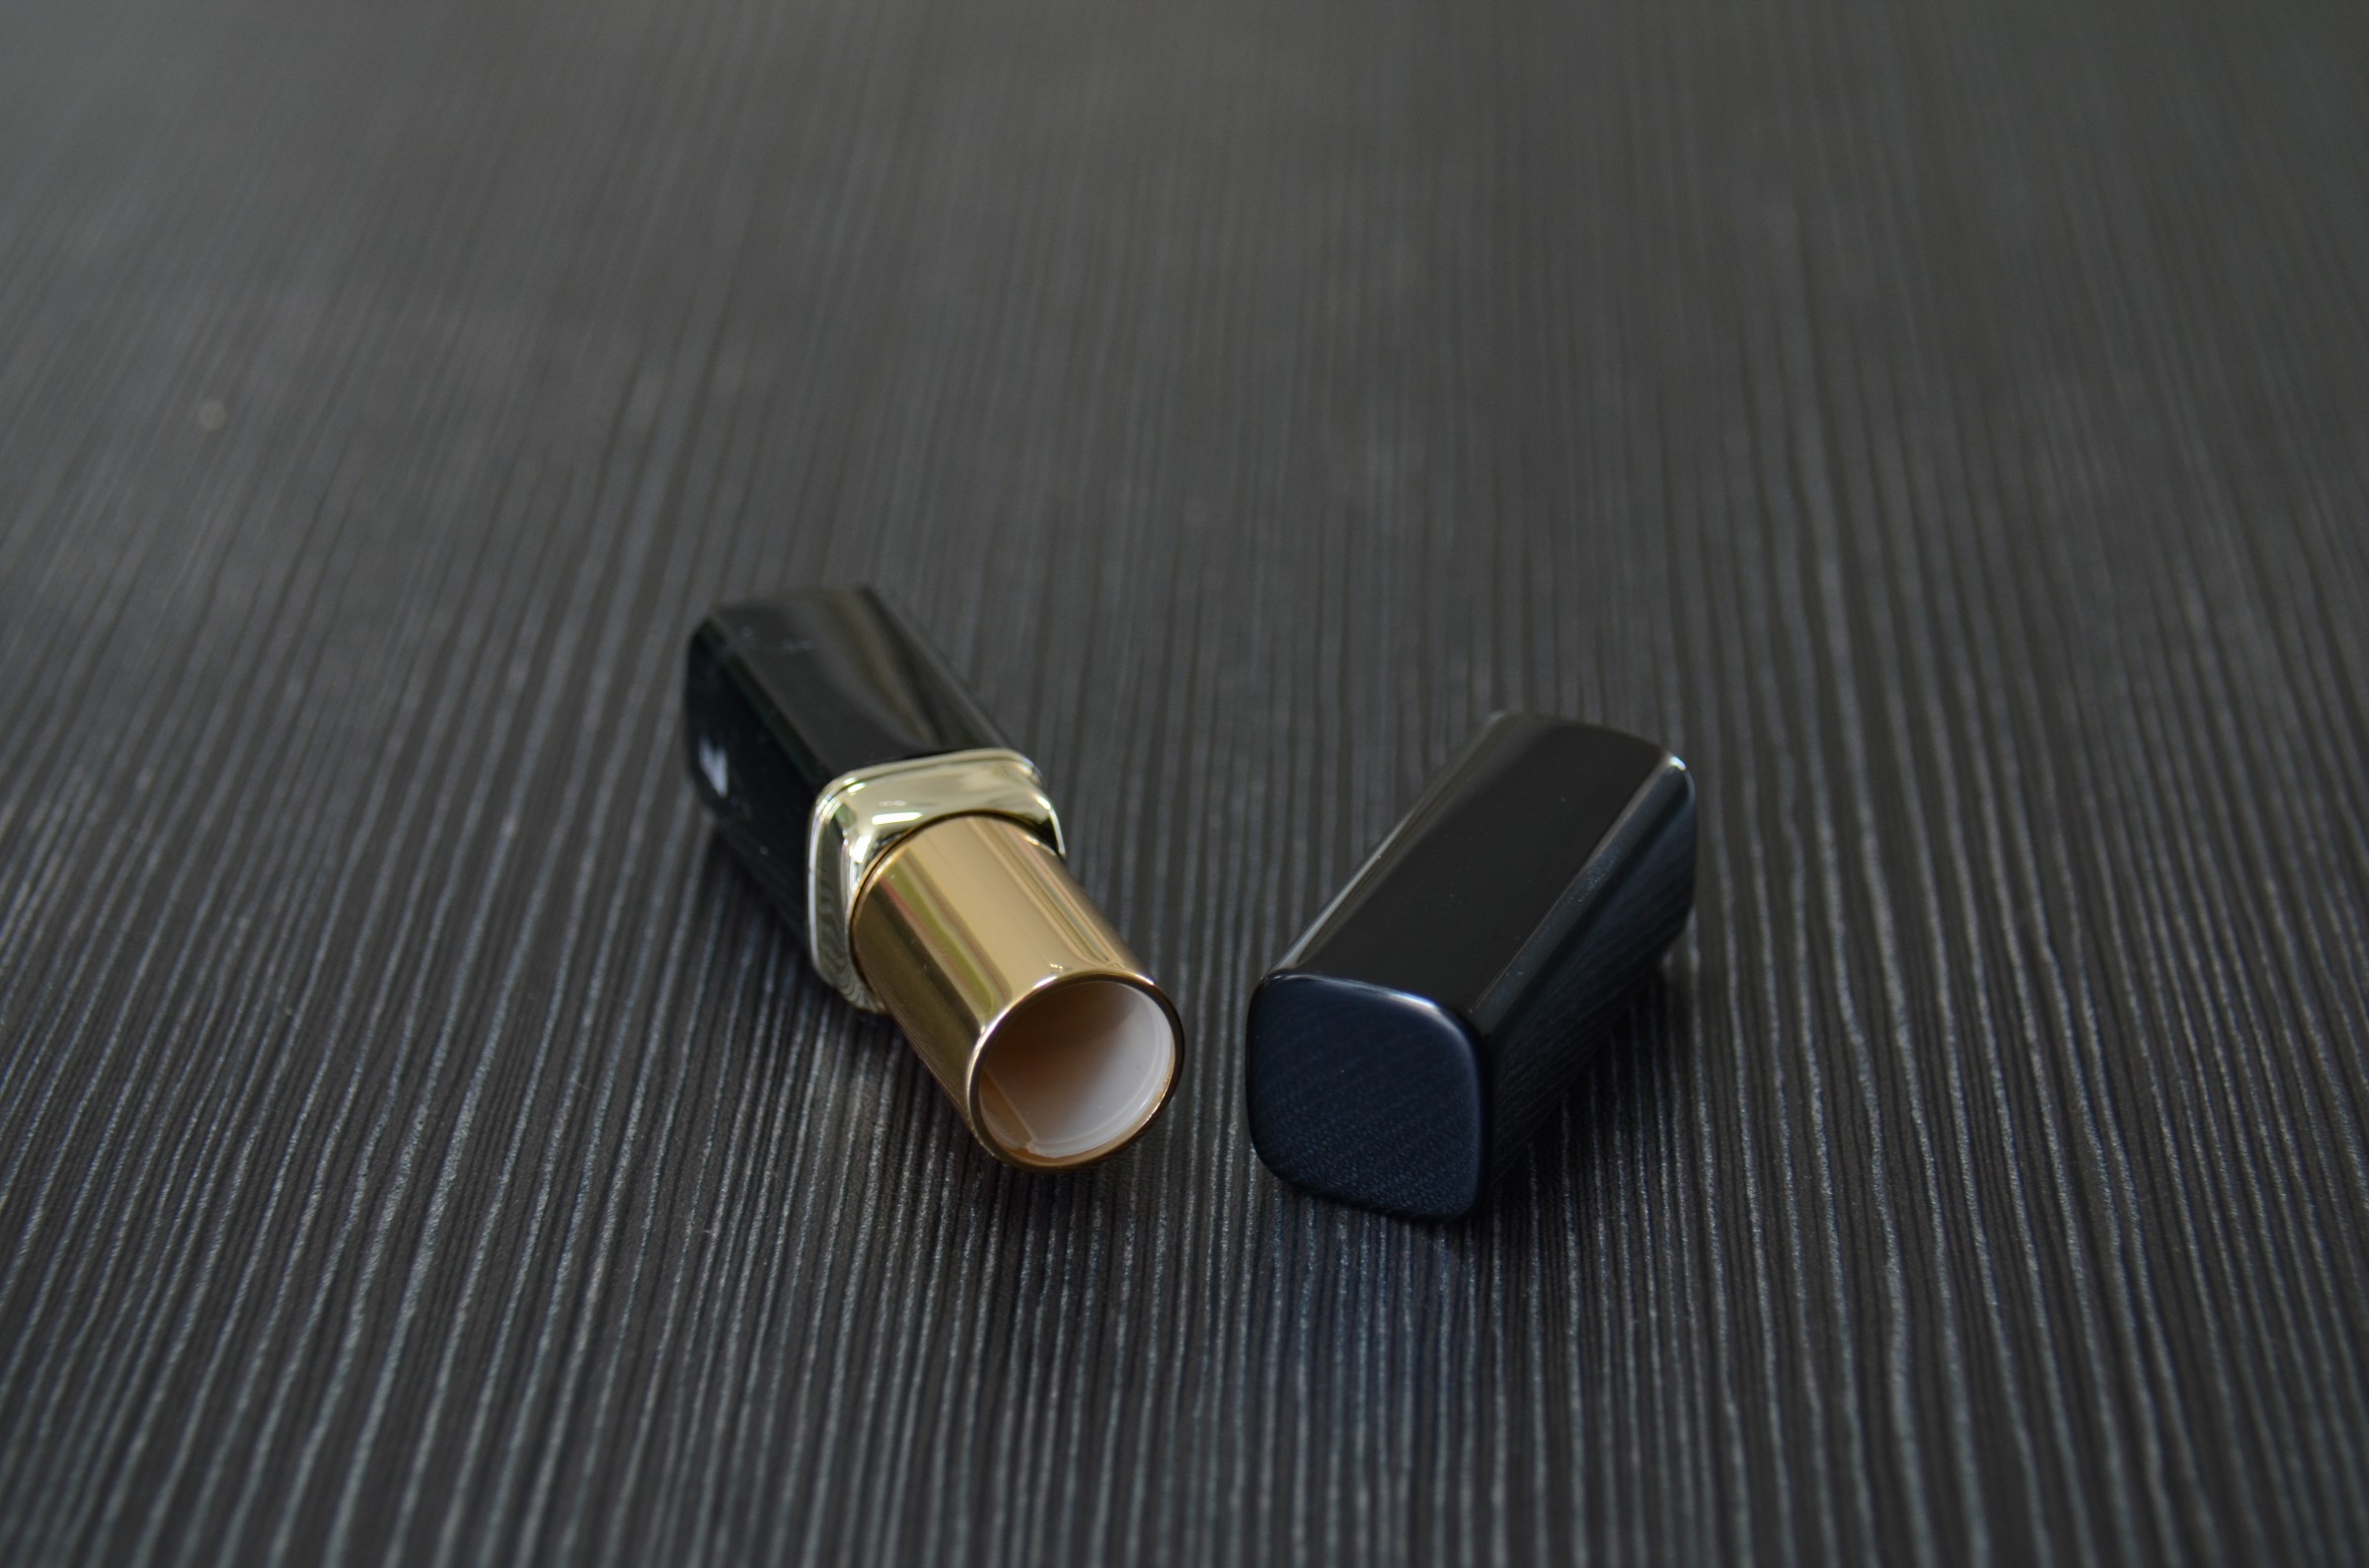 black empty metal lipstick tube